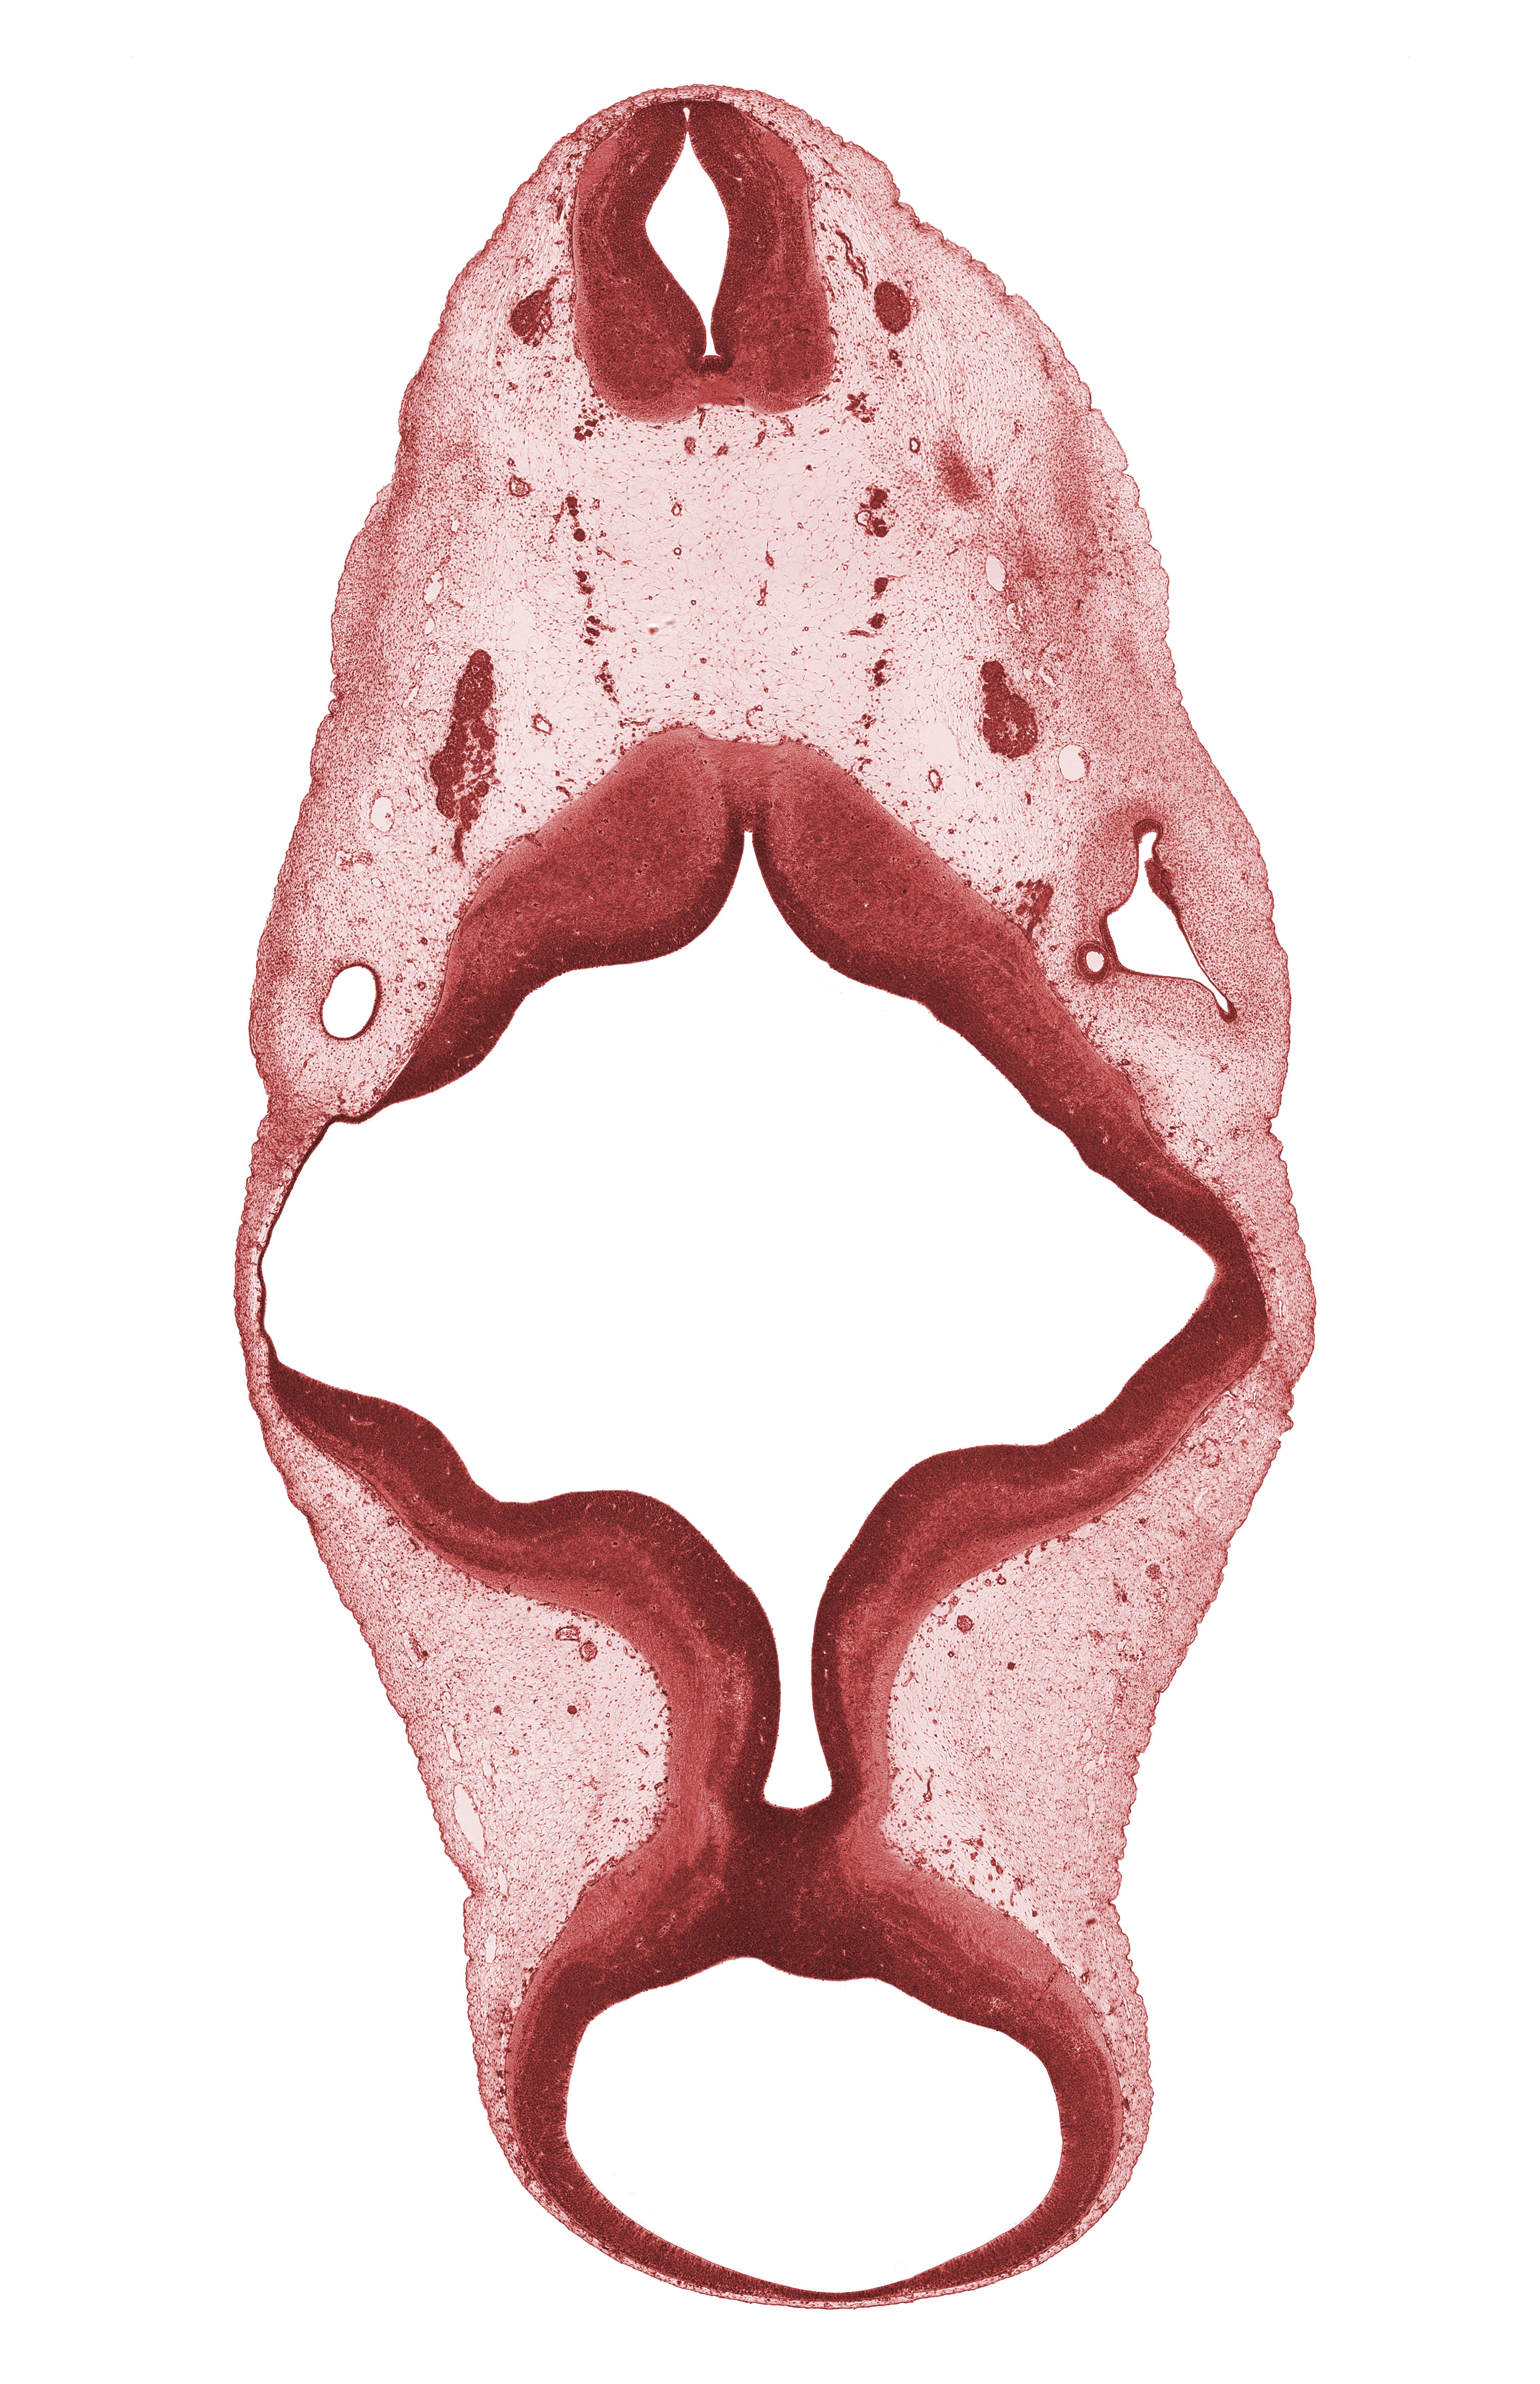 C-1 spinal ganglion, C-1 ventral root, endolymphatic duct, median sulcus, mesencoel (cerebral aqueduct), rhombomere 4, root of hypoglossal nerve (CN XII), trochlear nerve (CN IV), vagus nerve (CN X)